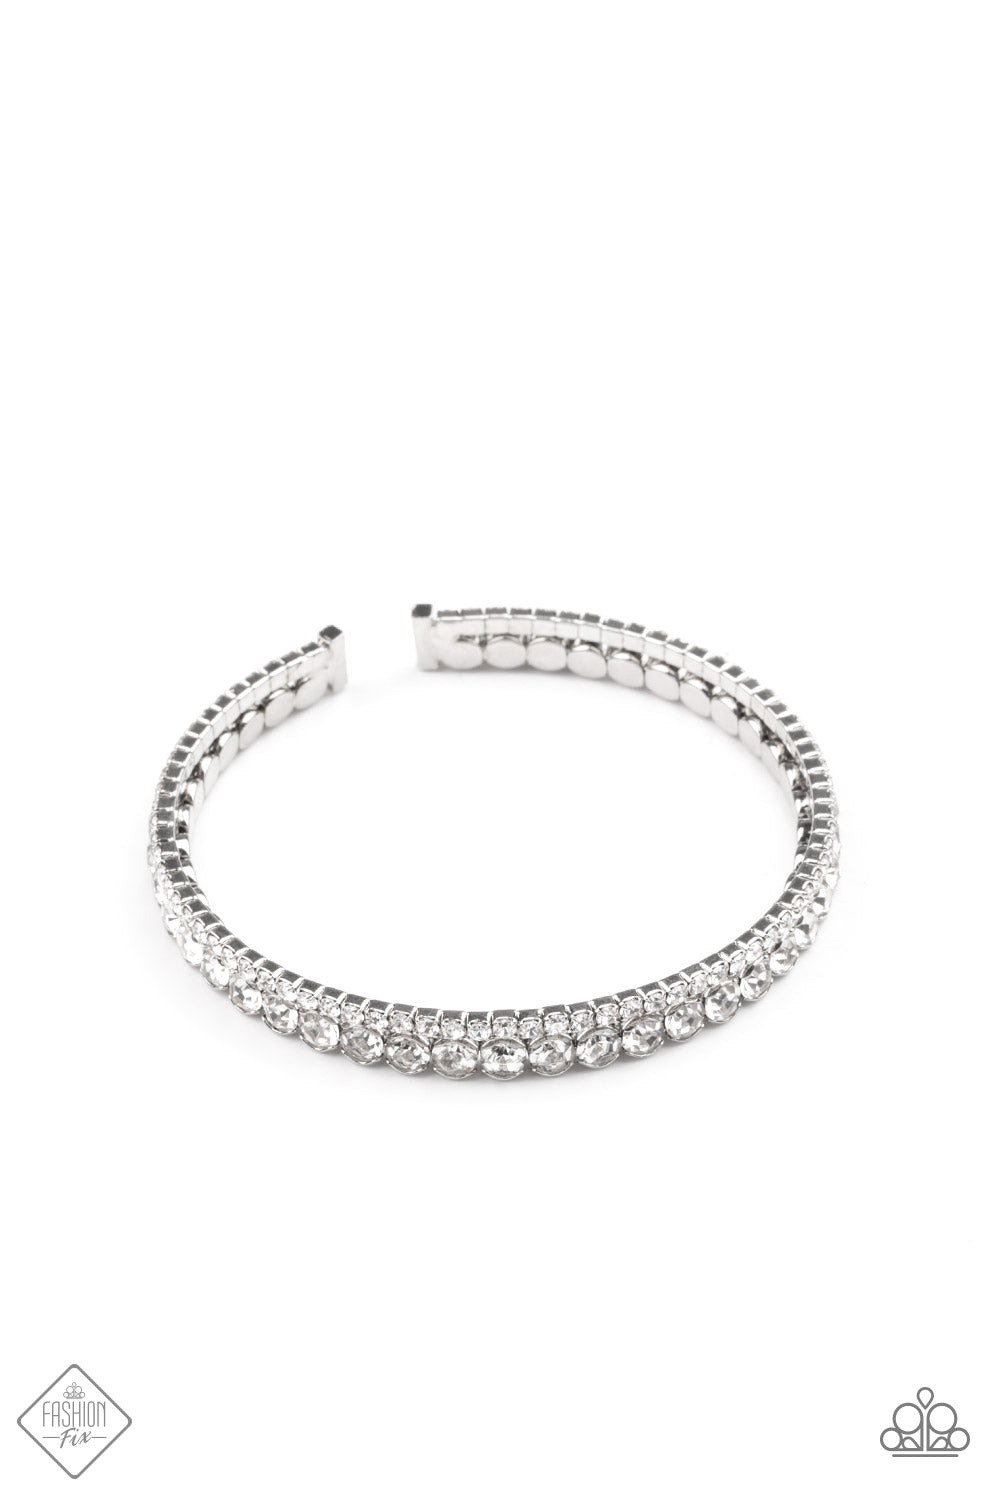 Paparazzi Fairytale Sparkle Fashion Fix - White Fashion Fix Bracelet - A Finishing Touch Jewelry